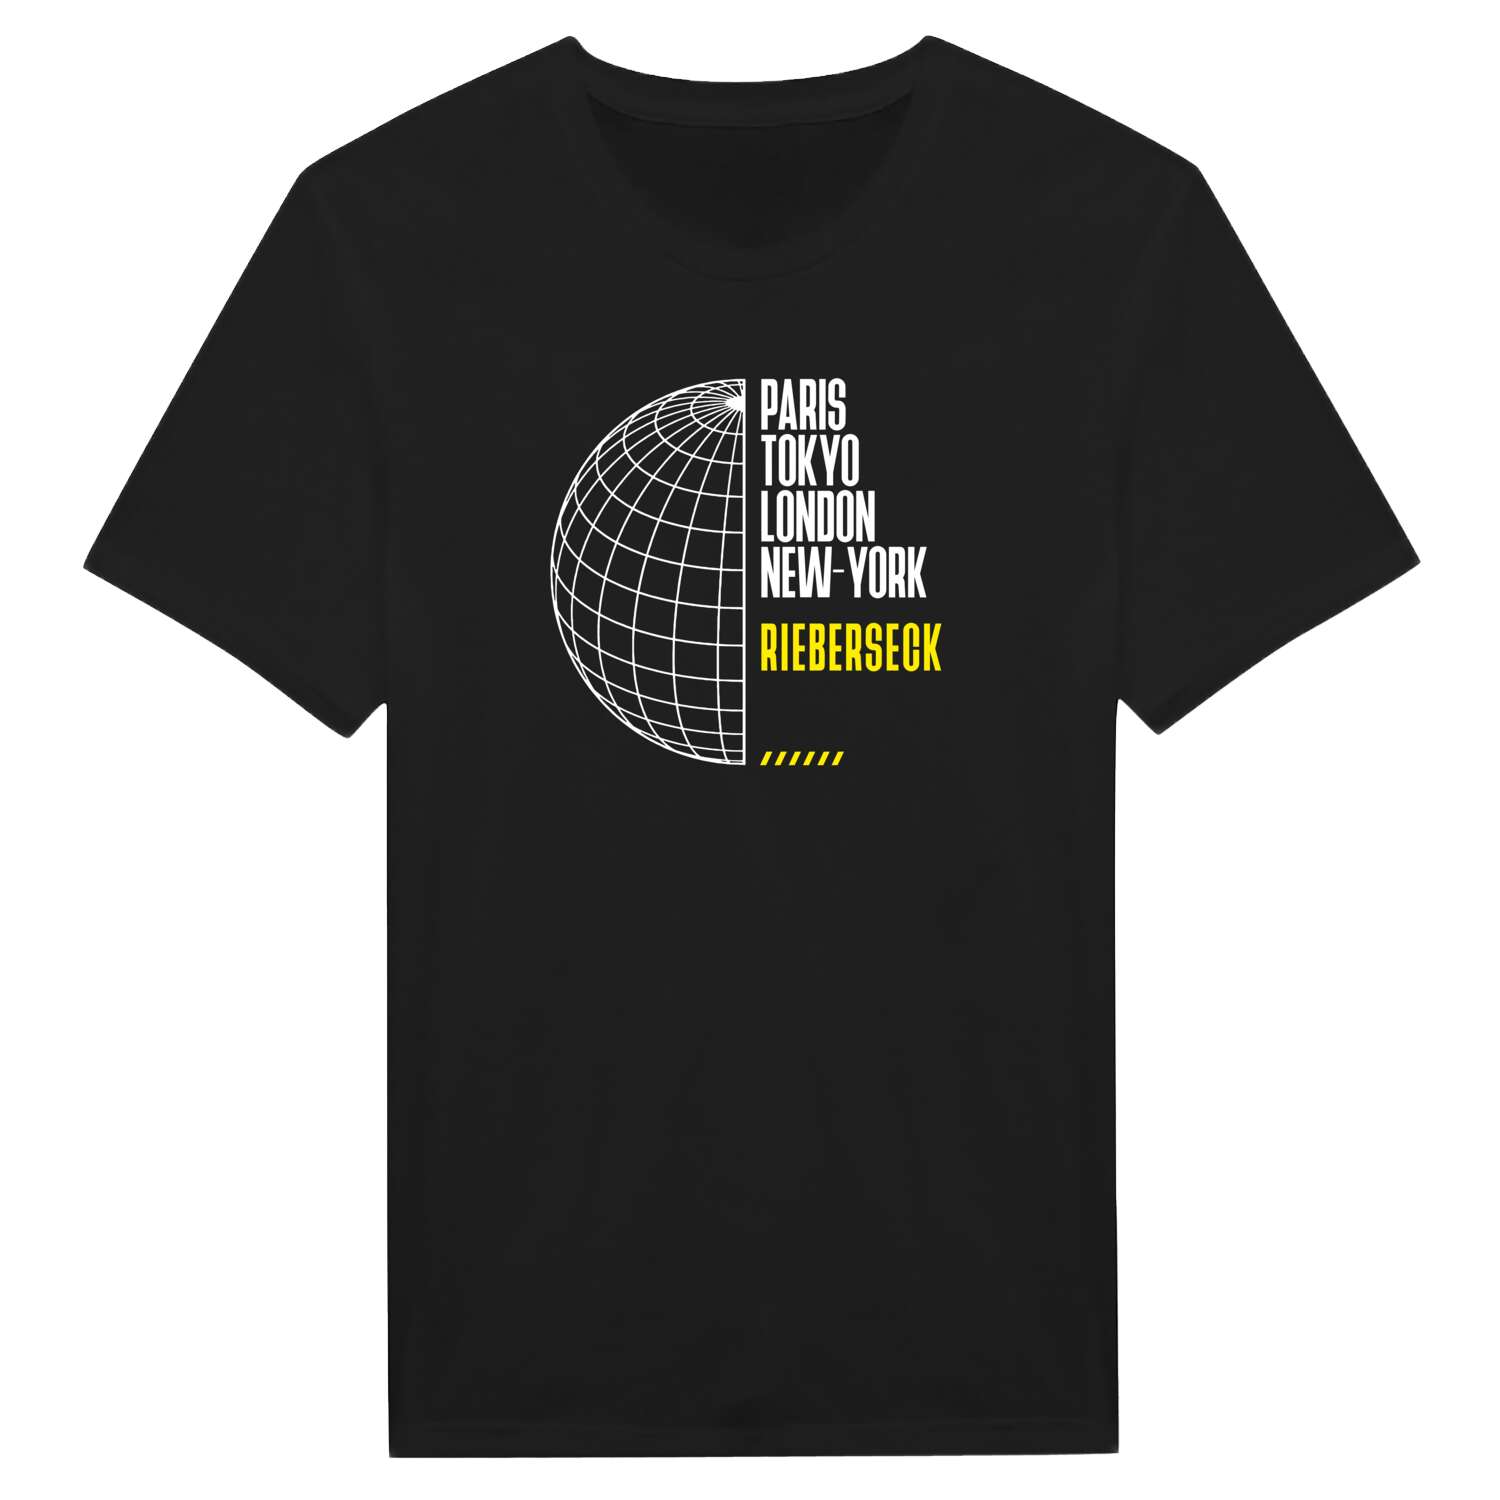 Rieberseck T-Shirt »Paris Tokyo London«